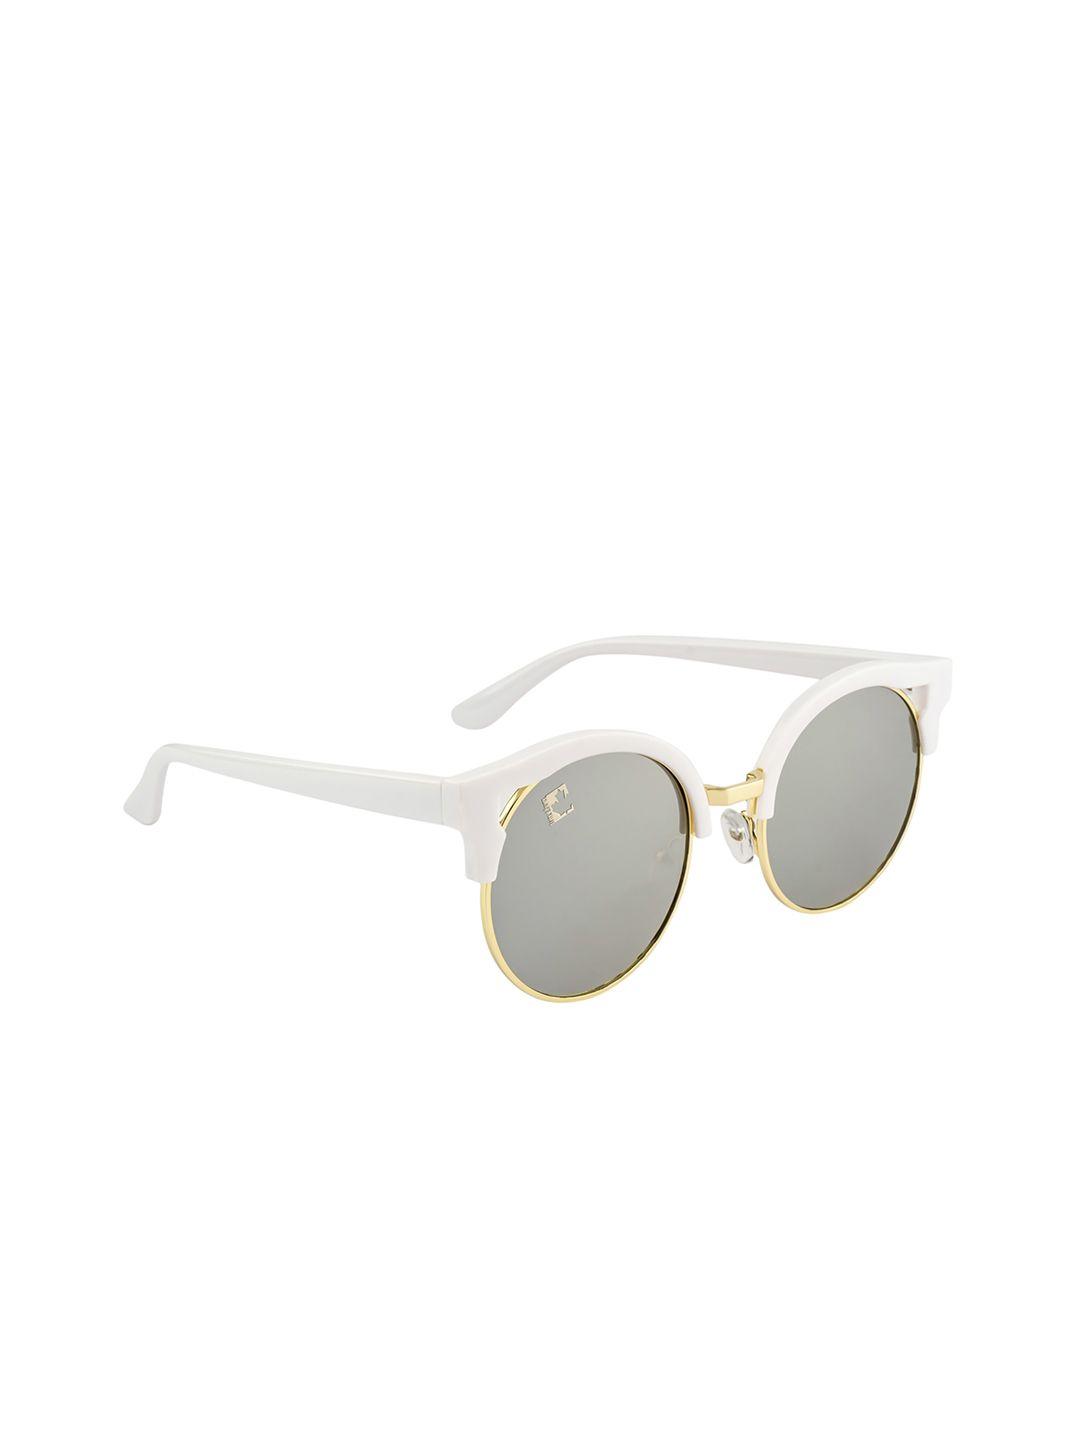 clark n palmer women oval sunglasses cnp-d15111-s101